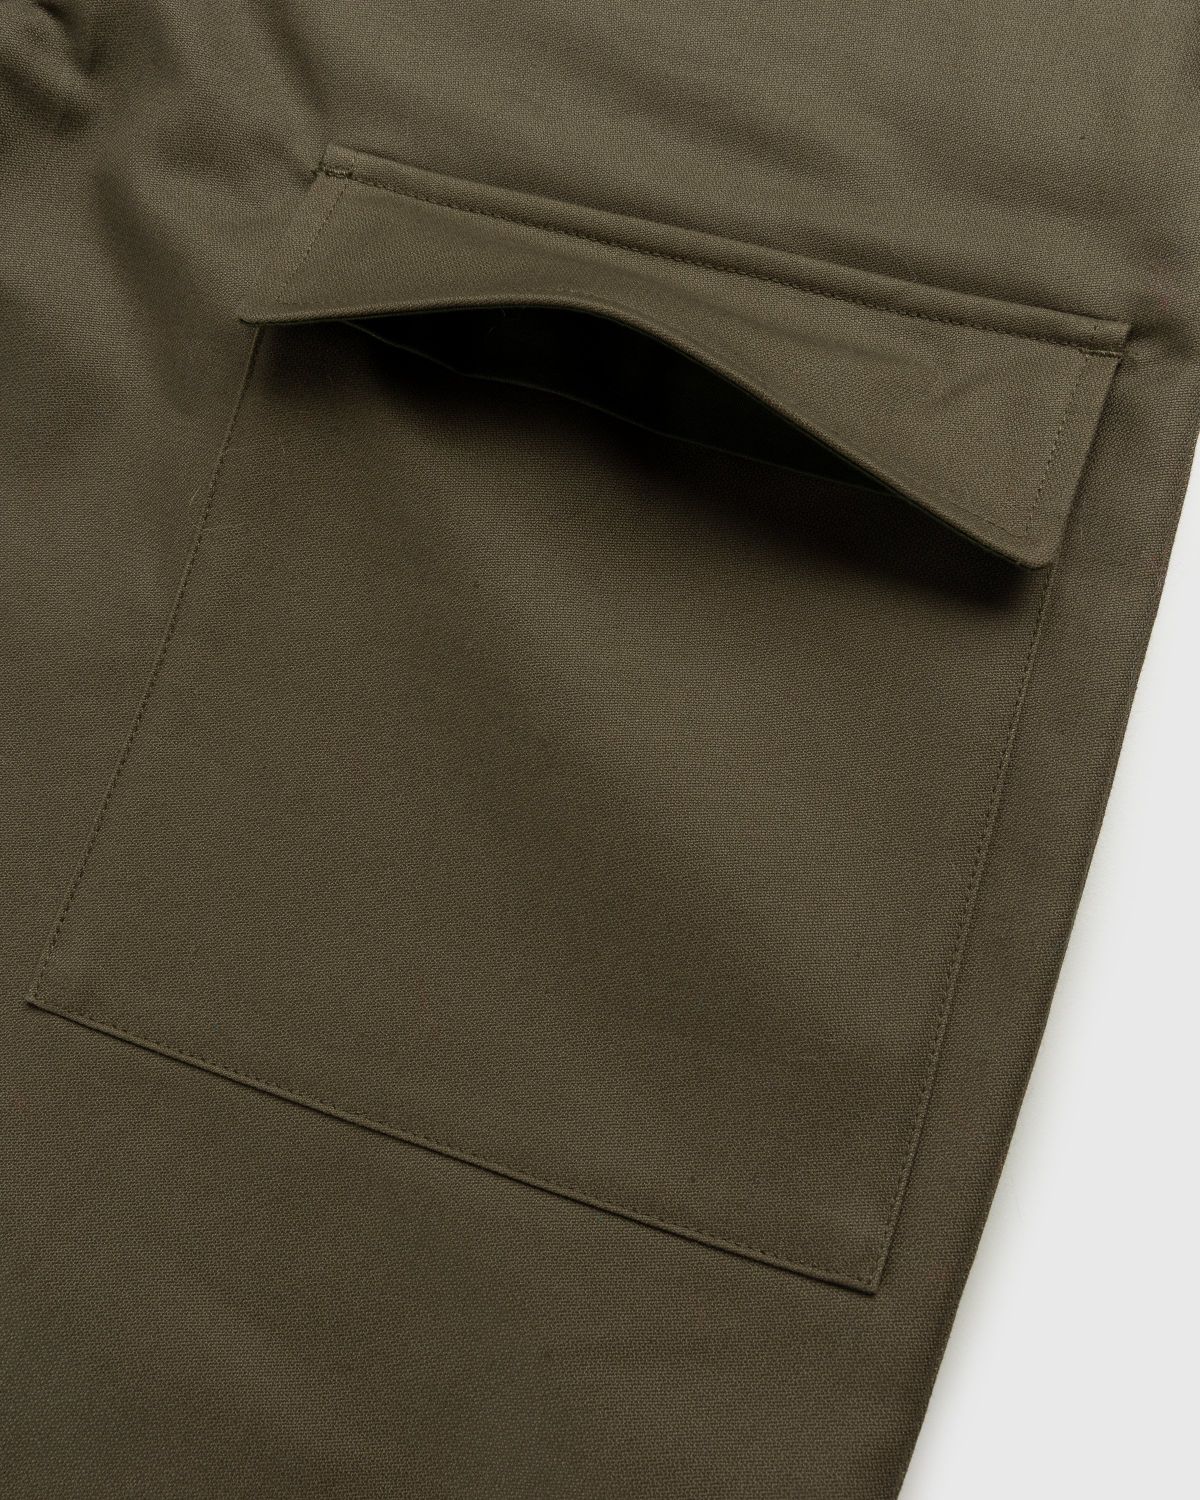 Kenzo – Tailored Pants Dark Khaki - Pants - Green - Image 6